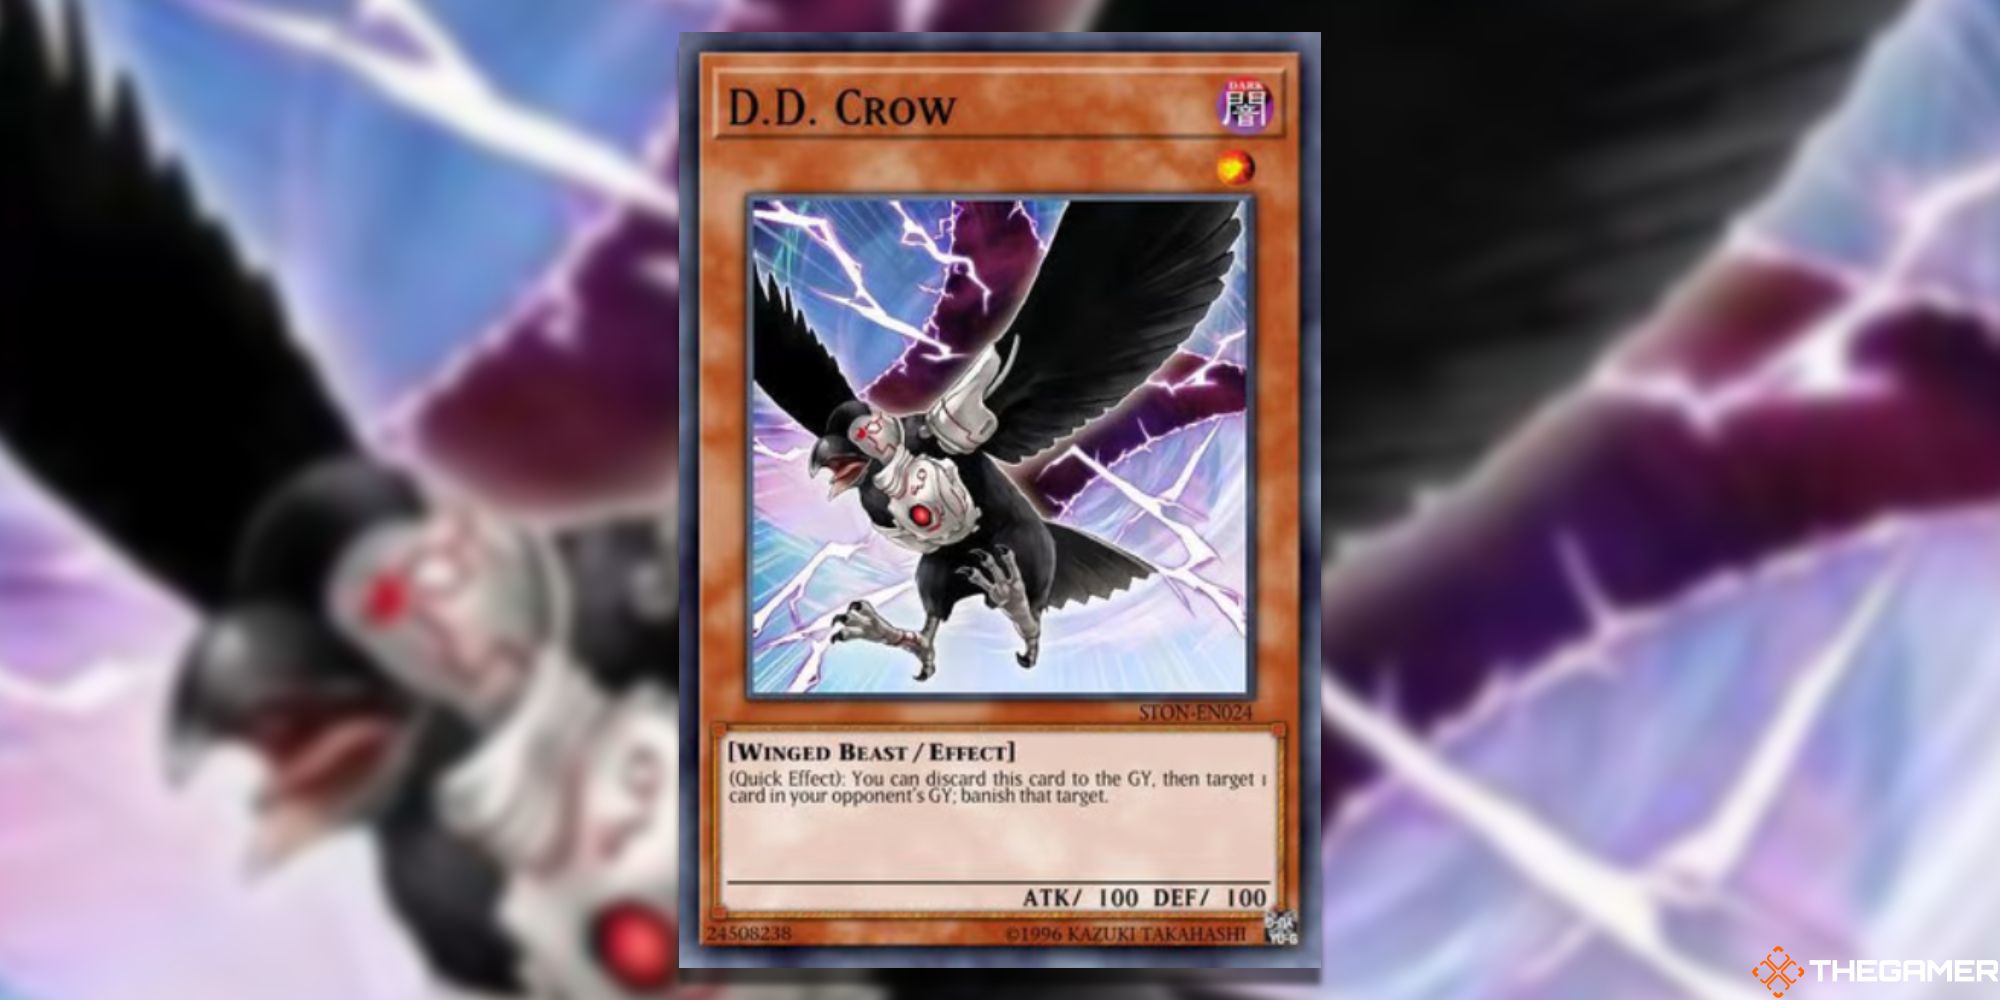 Yu-Gi-Oh! D.D. Crow on blurred background